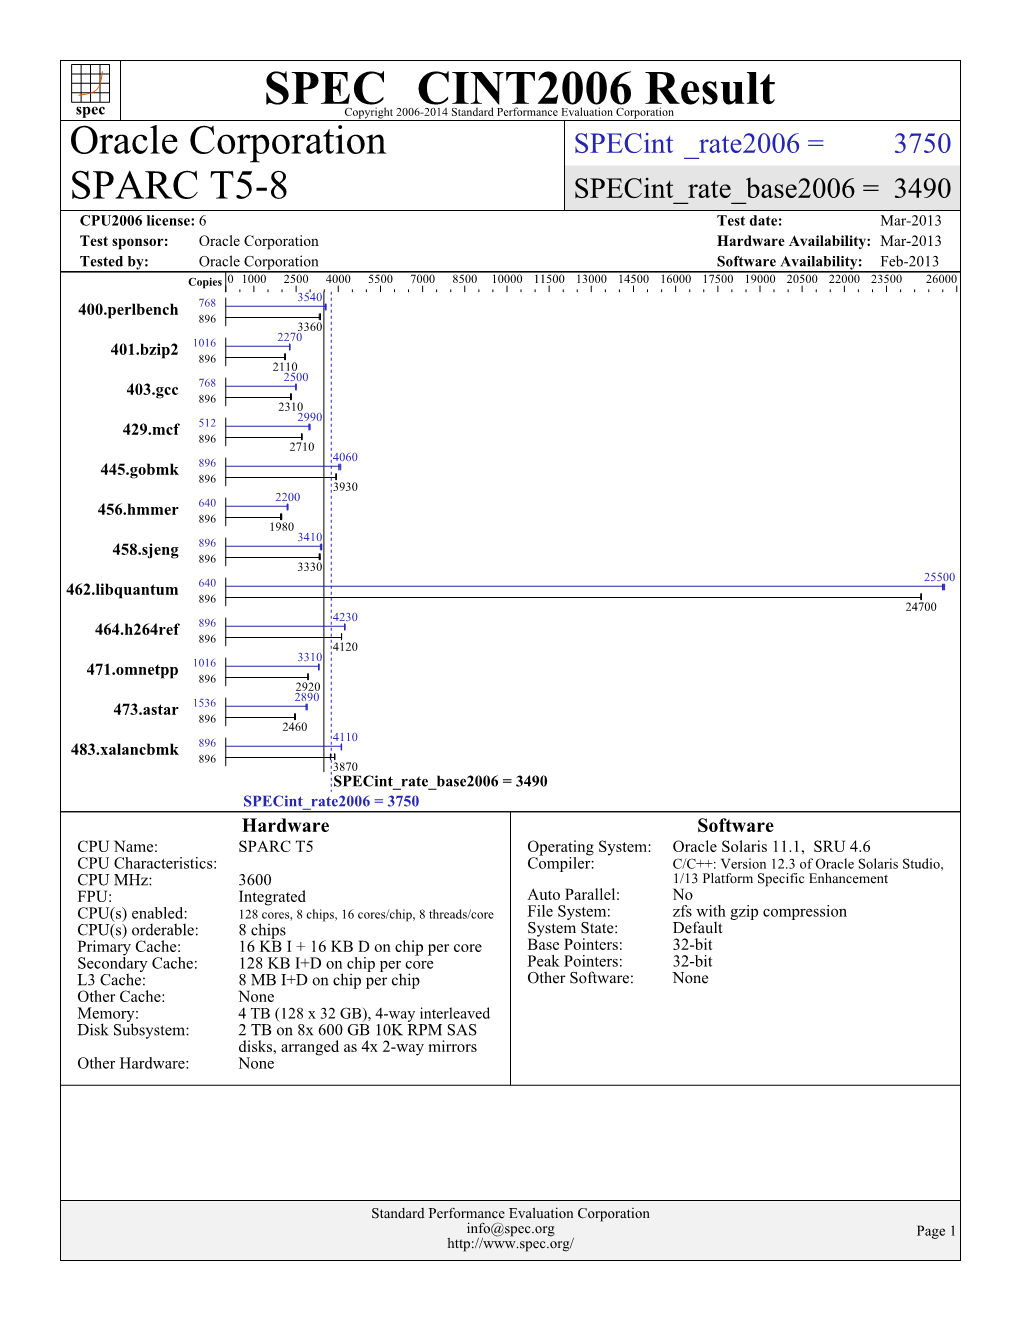 Oracle Corporation: SPARC T5-8